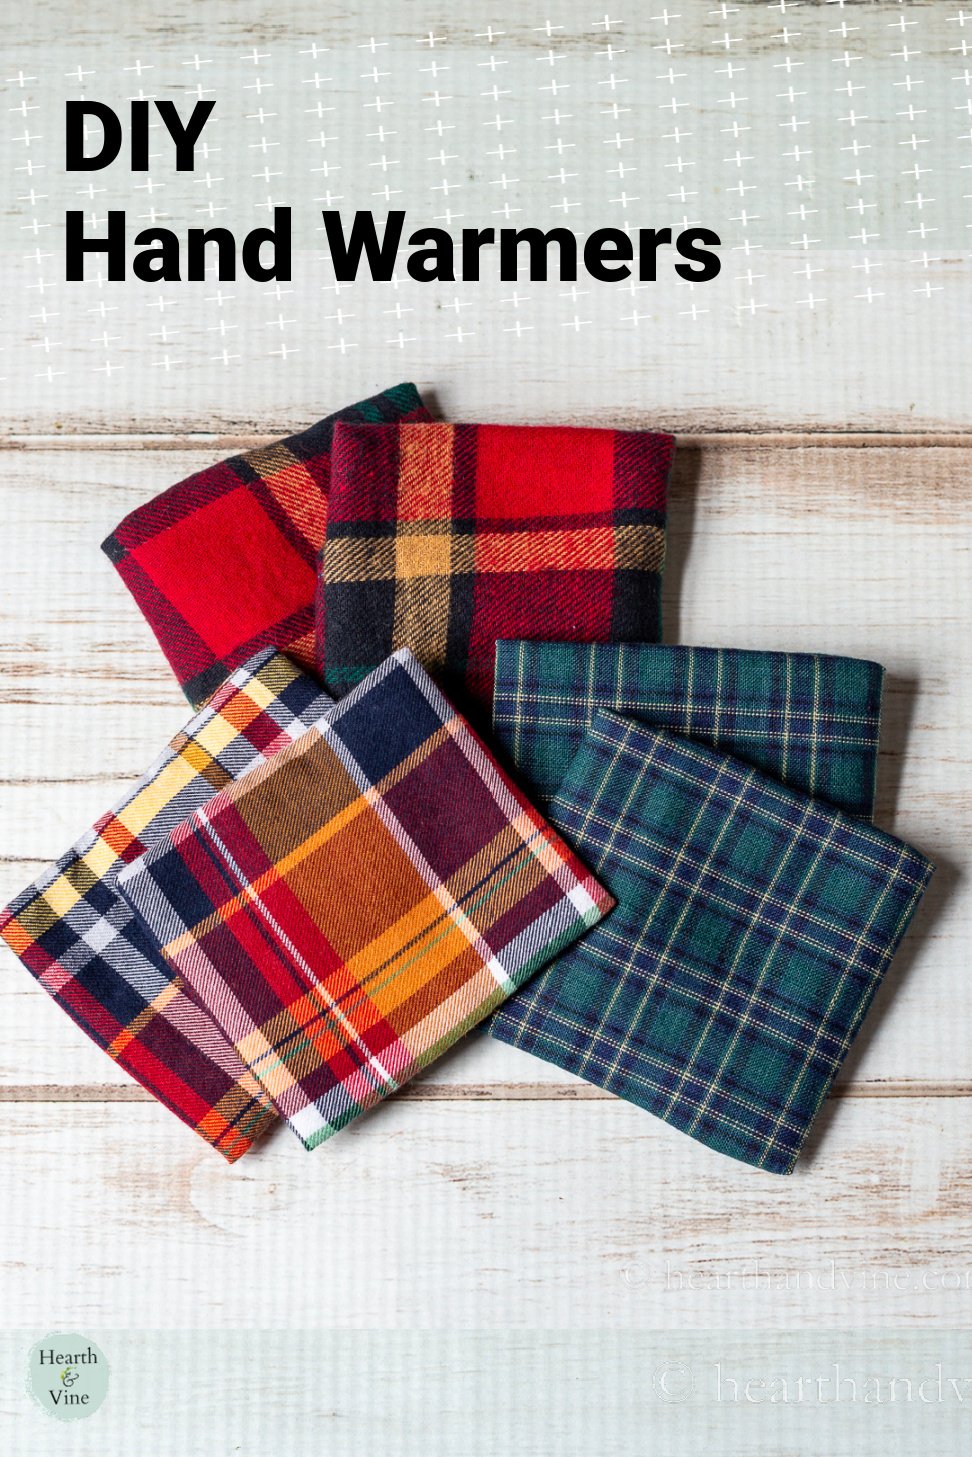 Three sets of plaid hand warmers